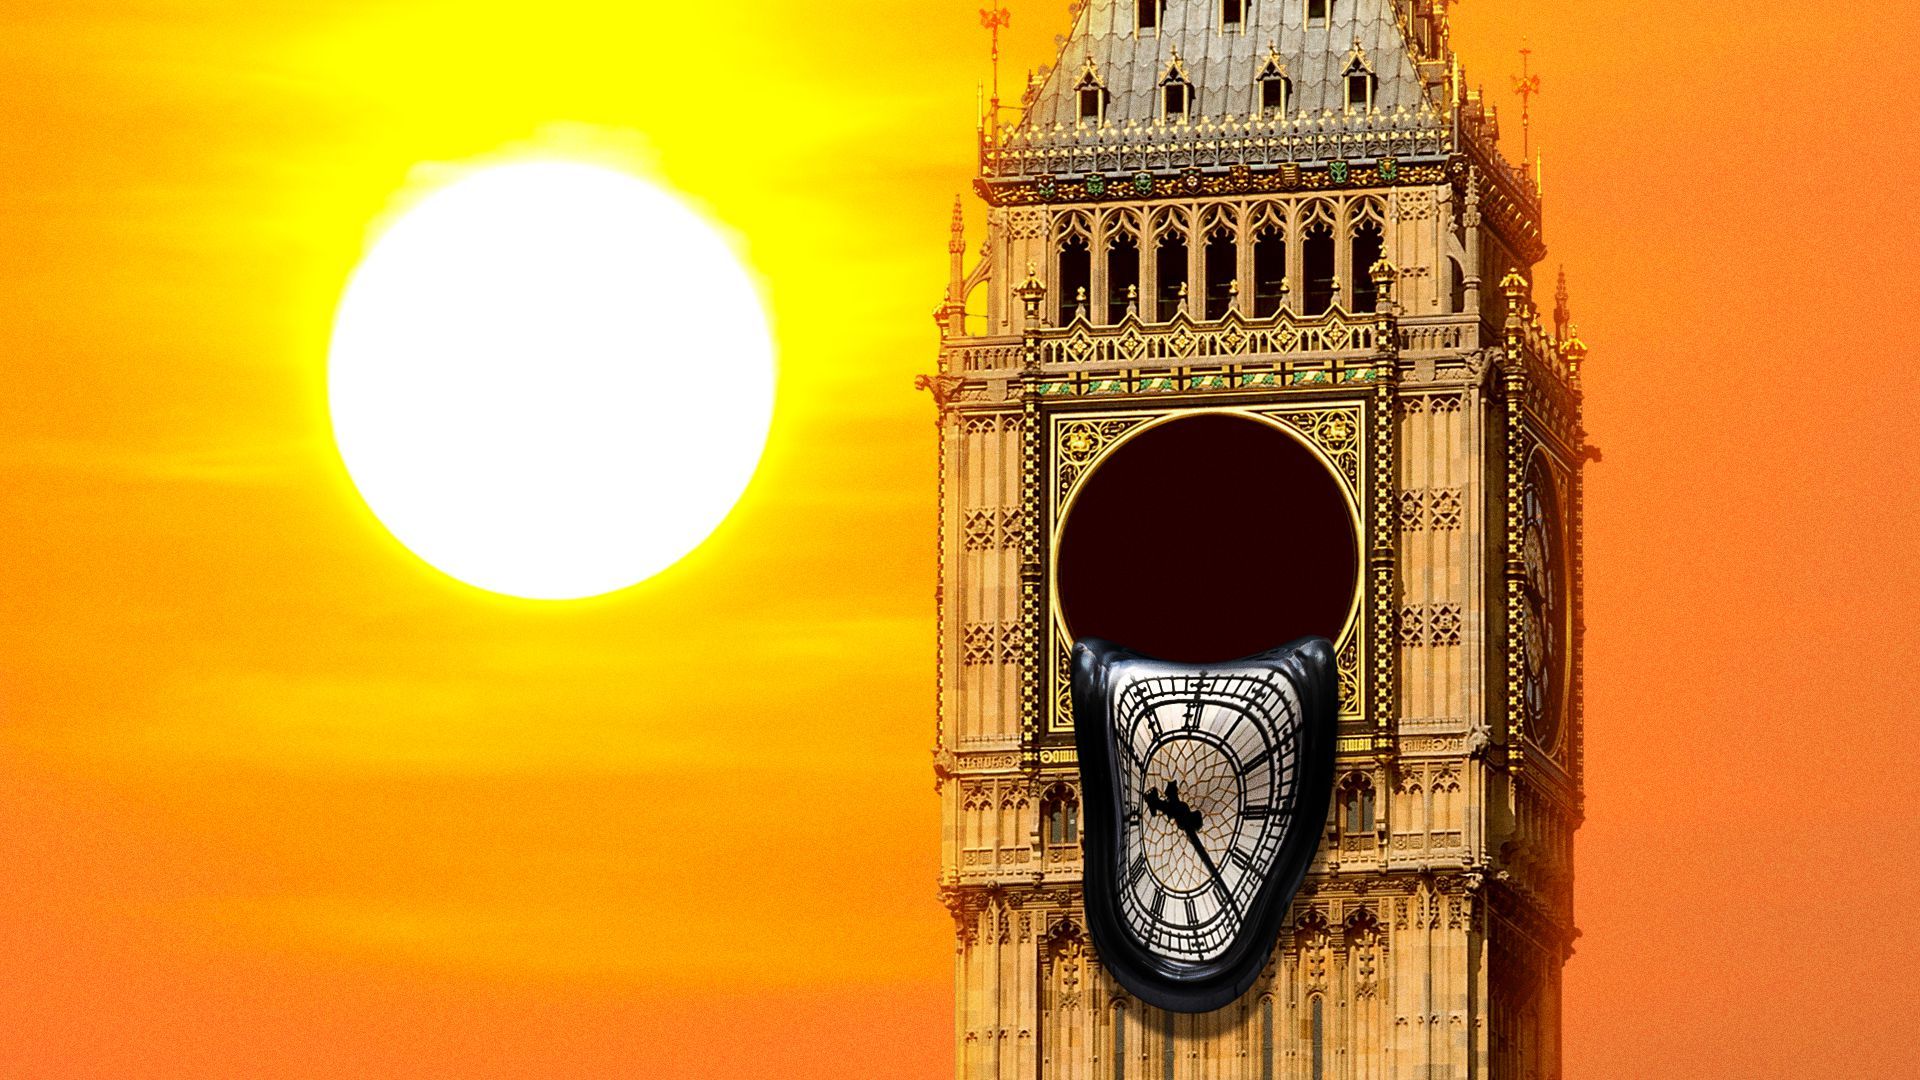 Illustration Big Ben, the clock in London, melting.